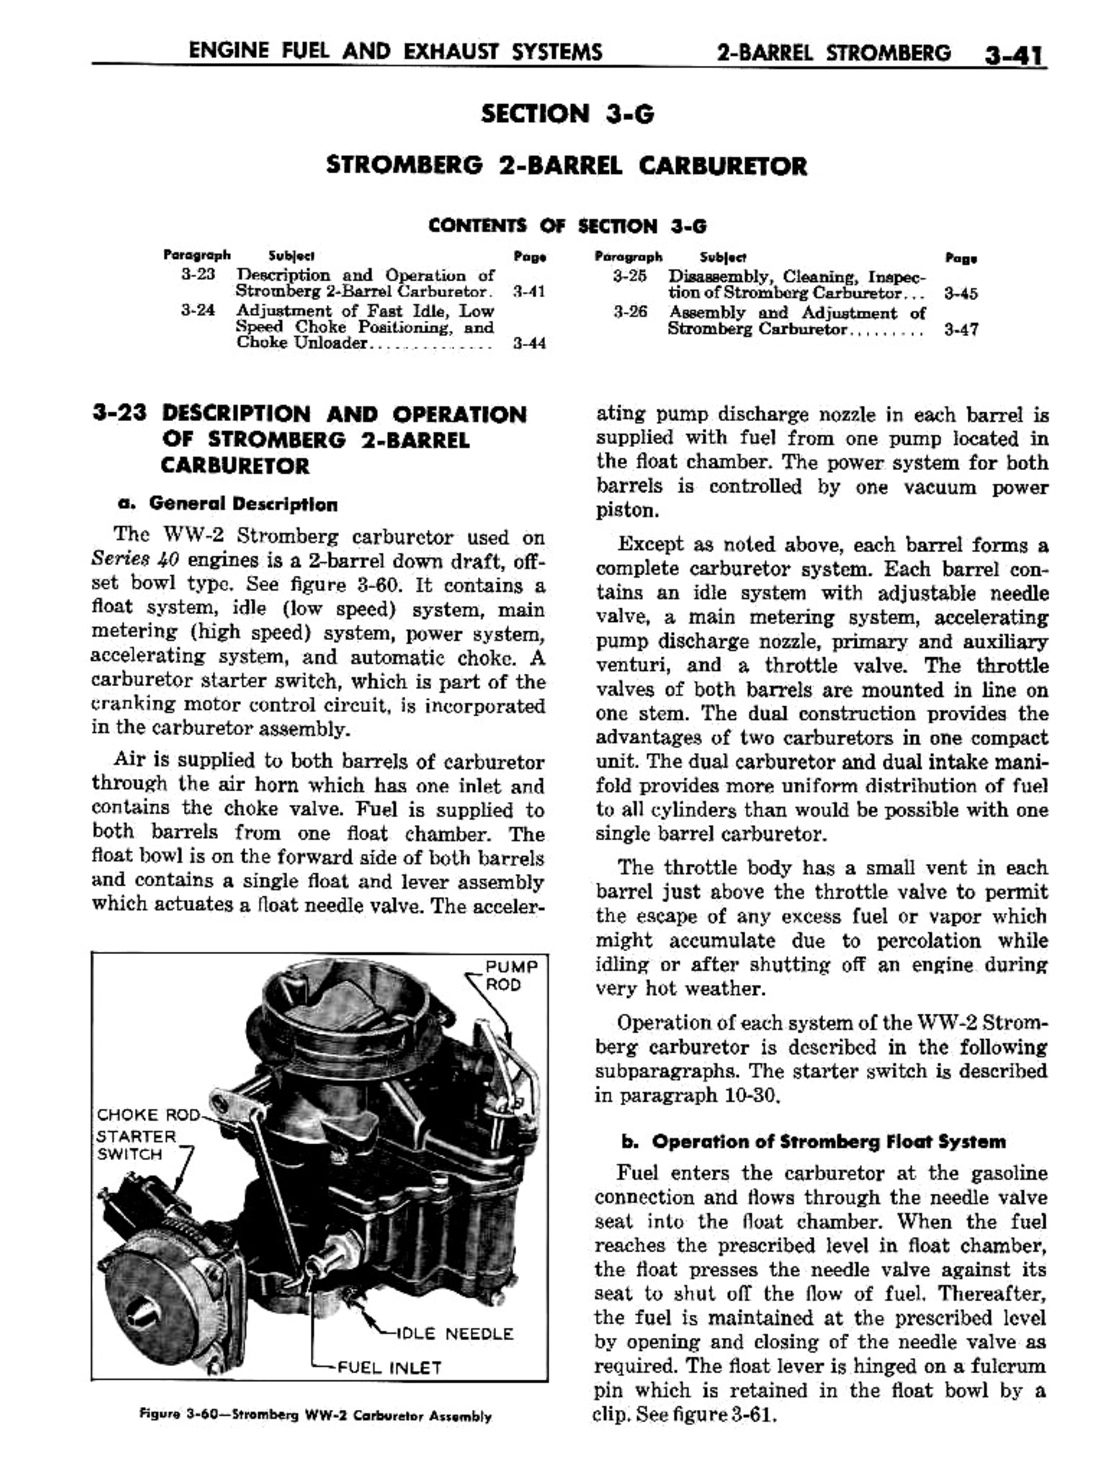 n_04 1957 Buick Shop Manual - Engine Fuel & Exhaust-041-041.jpg